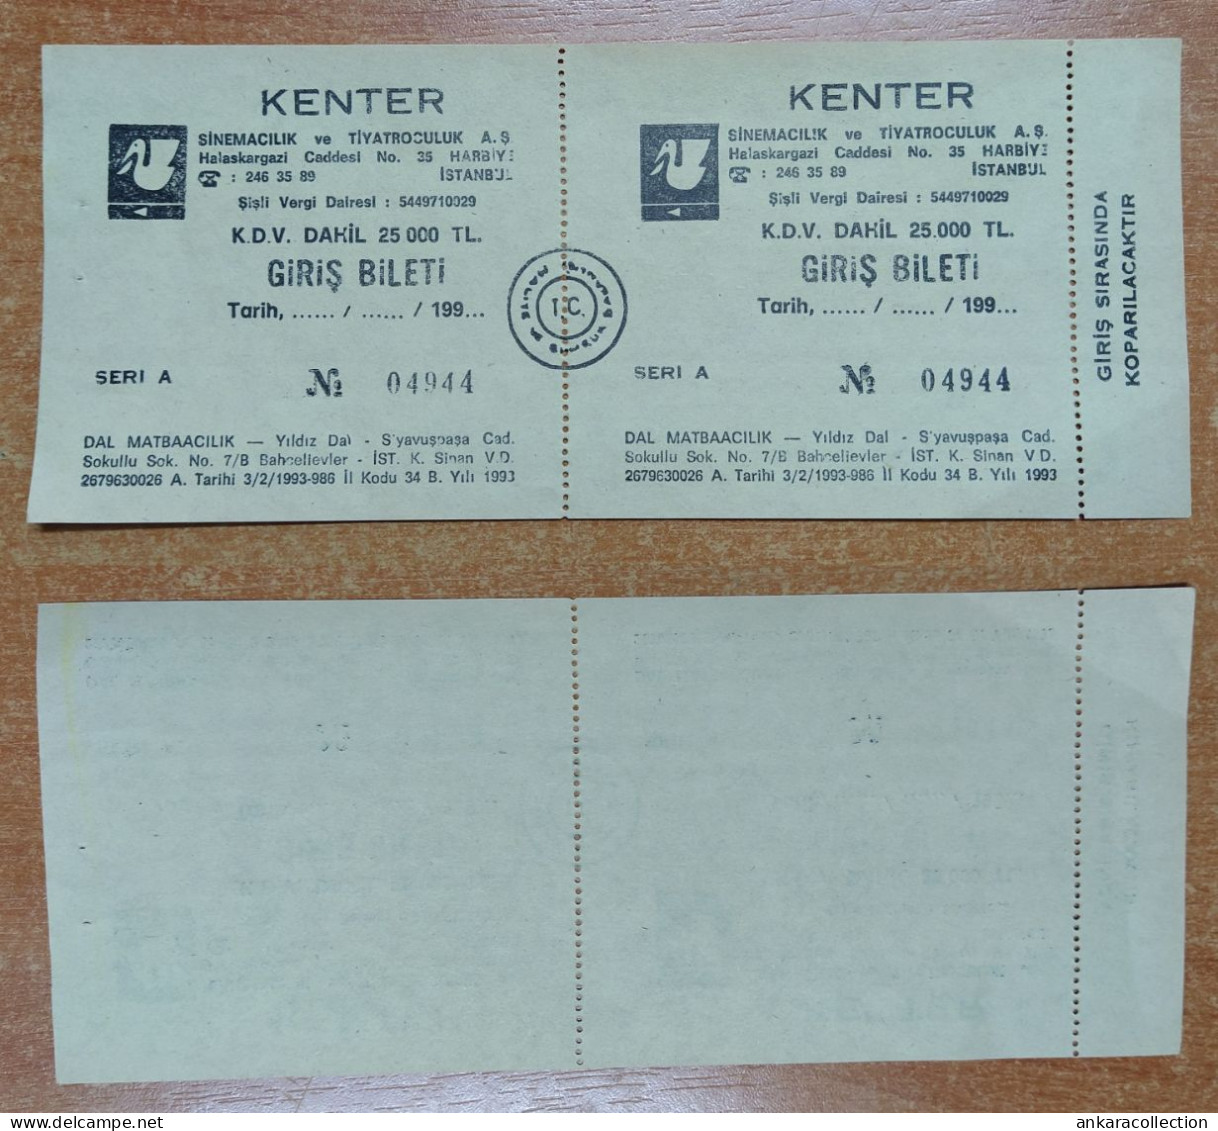 AC - KENTER  CINEMA & THEATER TICKET  1993  ISTANBUL TURKEY CONCERT TICKET WITH COUNTERFOIL - Entradas A Conciertos